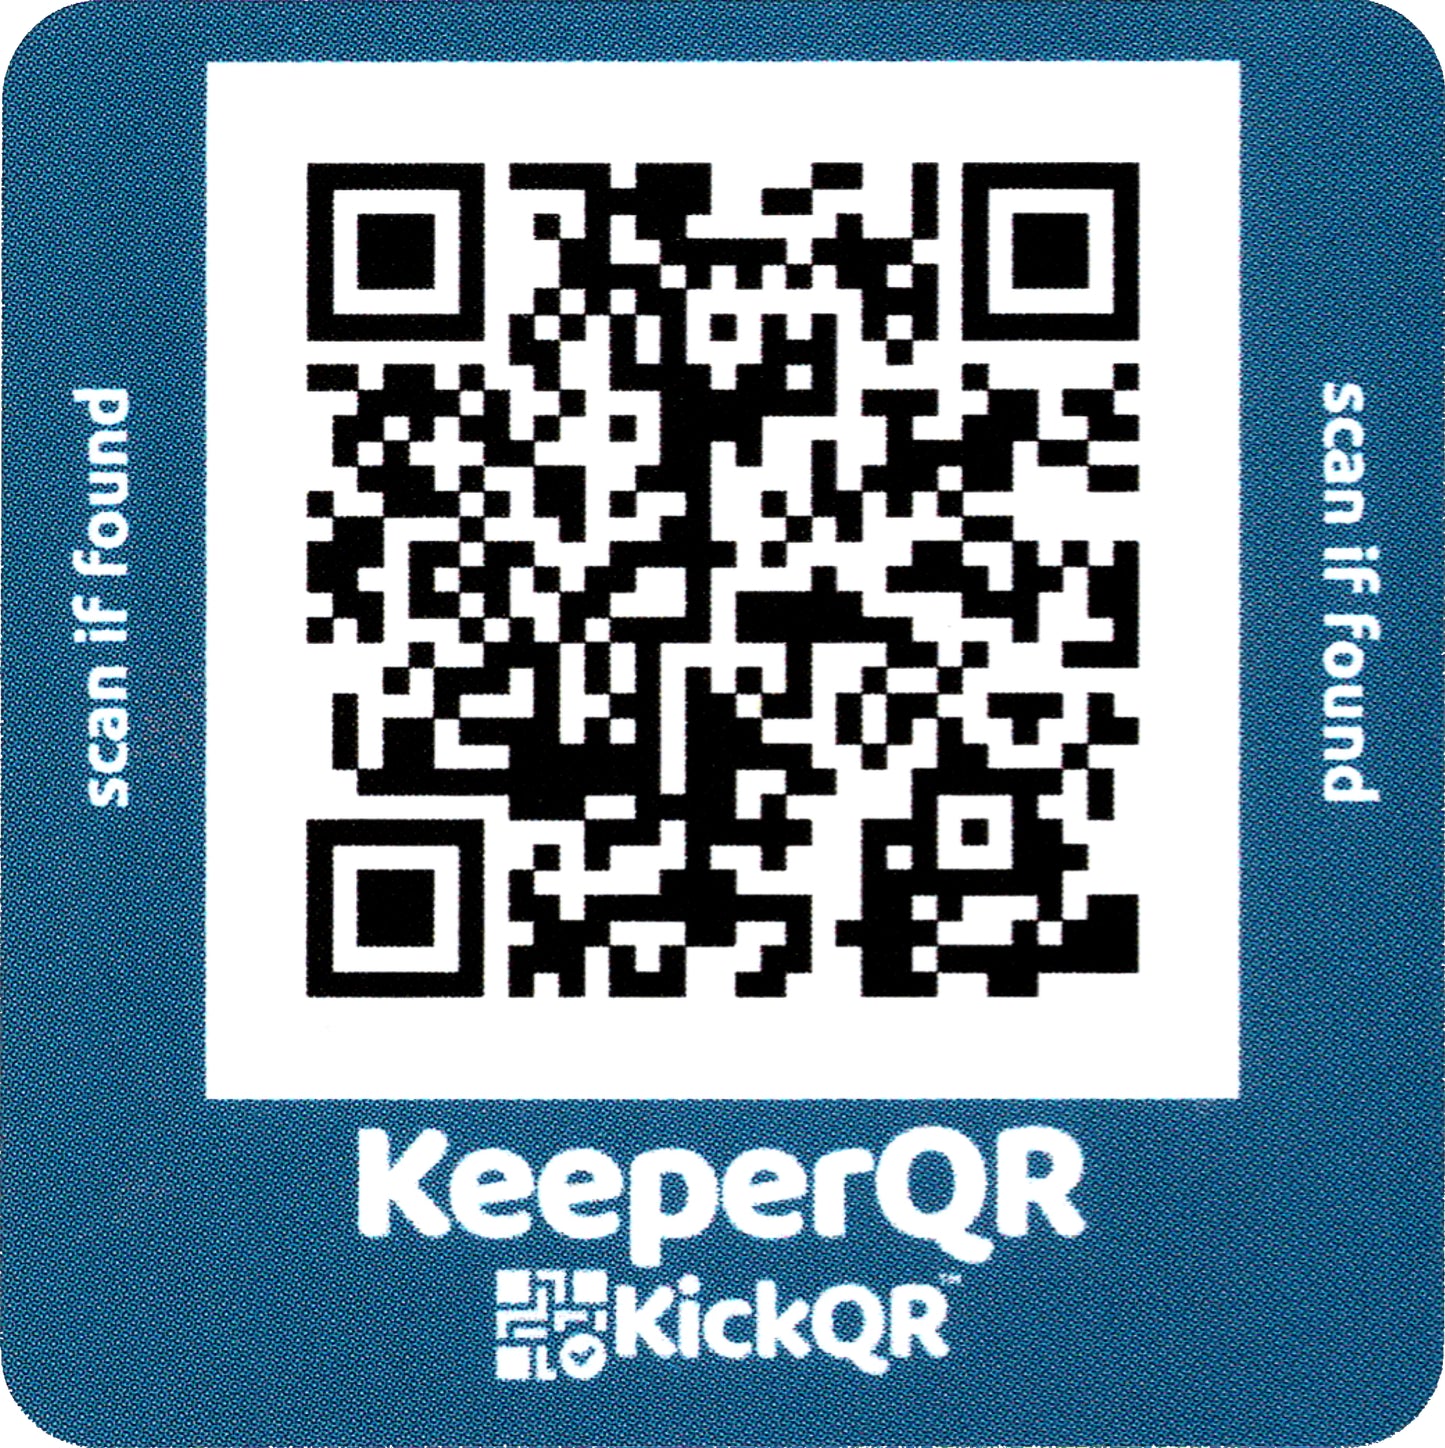 A single KeeperQR sticker